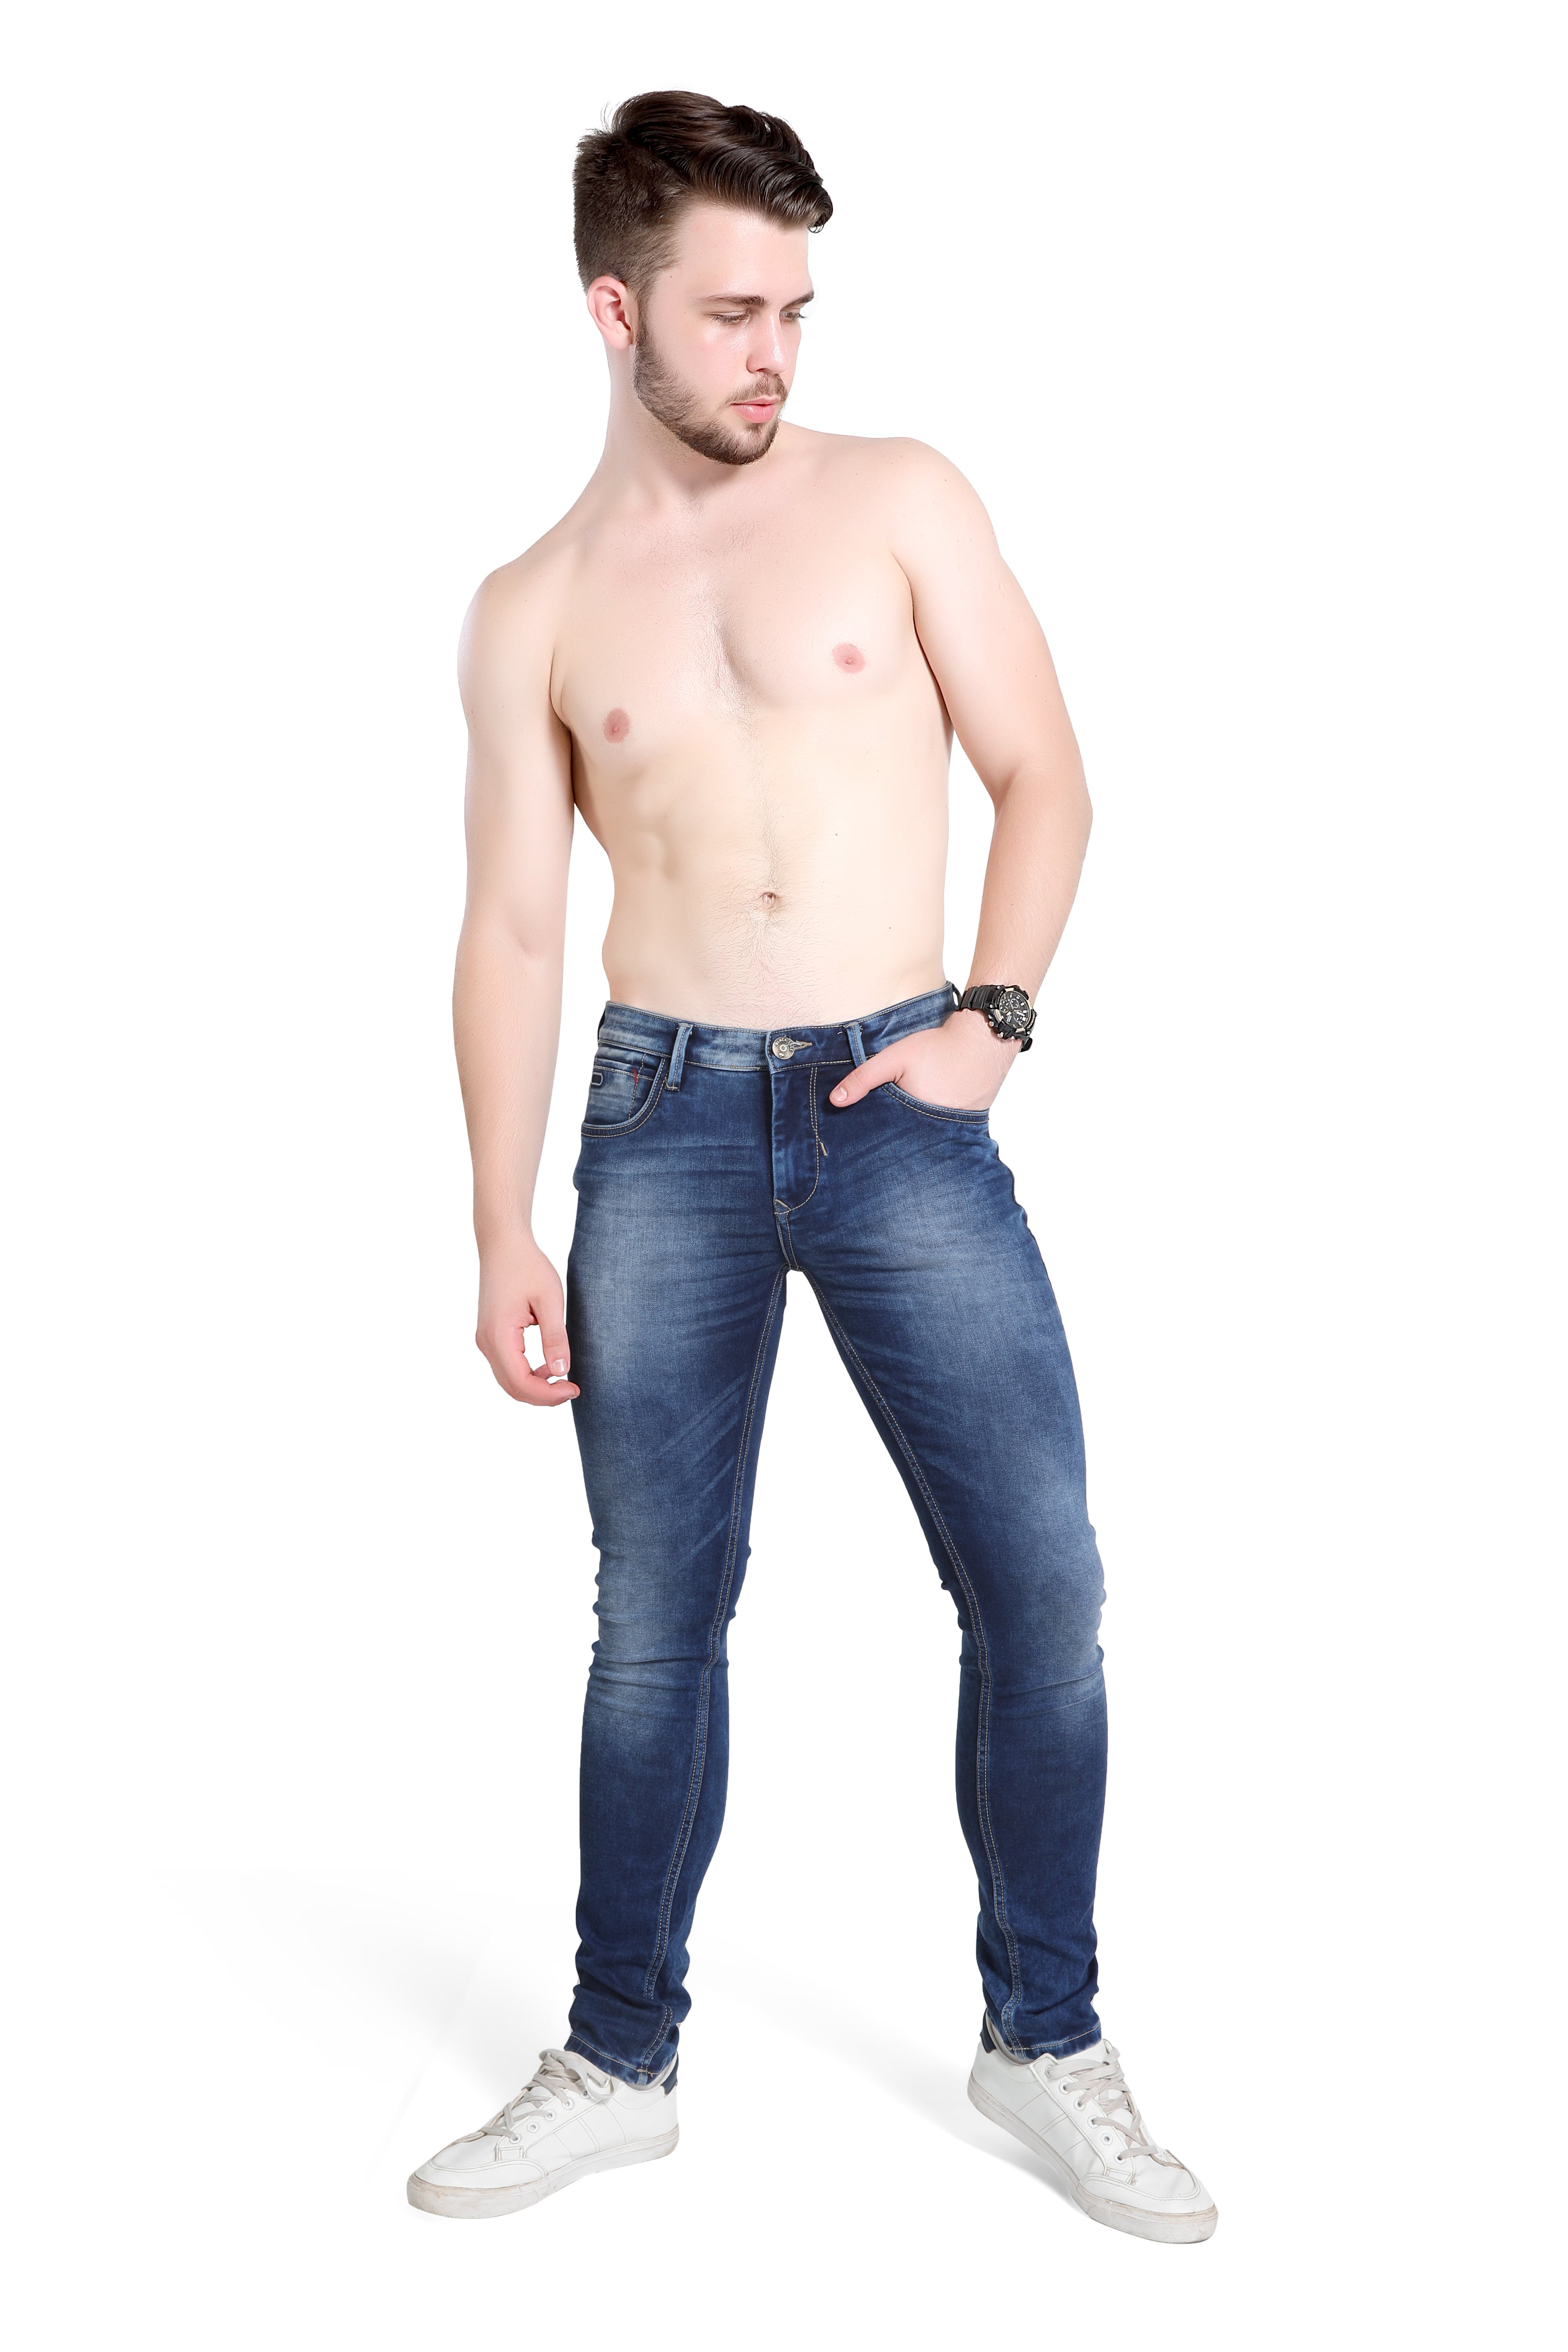 FOX JEANS Men's Todd Straight Distressed Blue Denim Jeans SIZE 36 | eBay